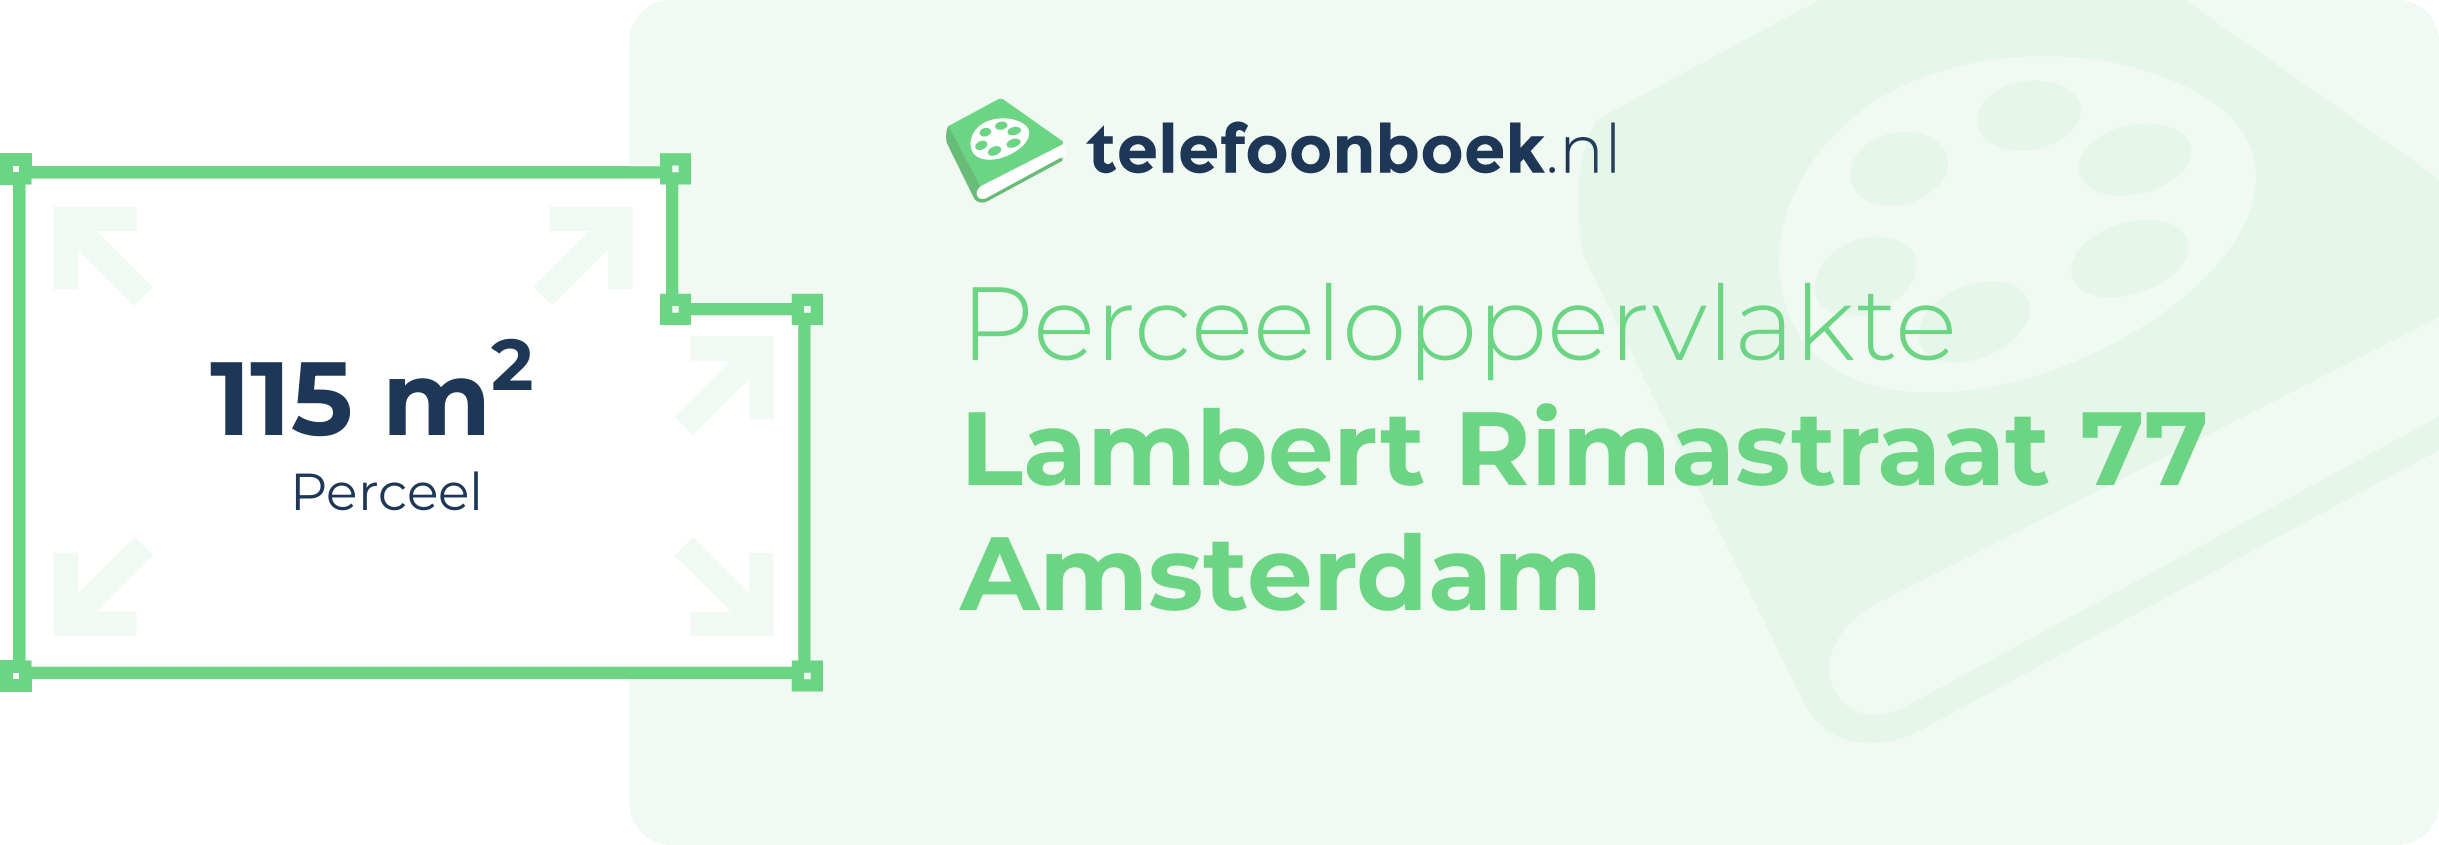 Perceeloppervlakte Lambert Rimastraat 77 Amsterdam